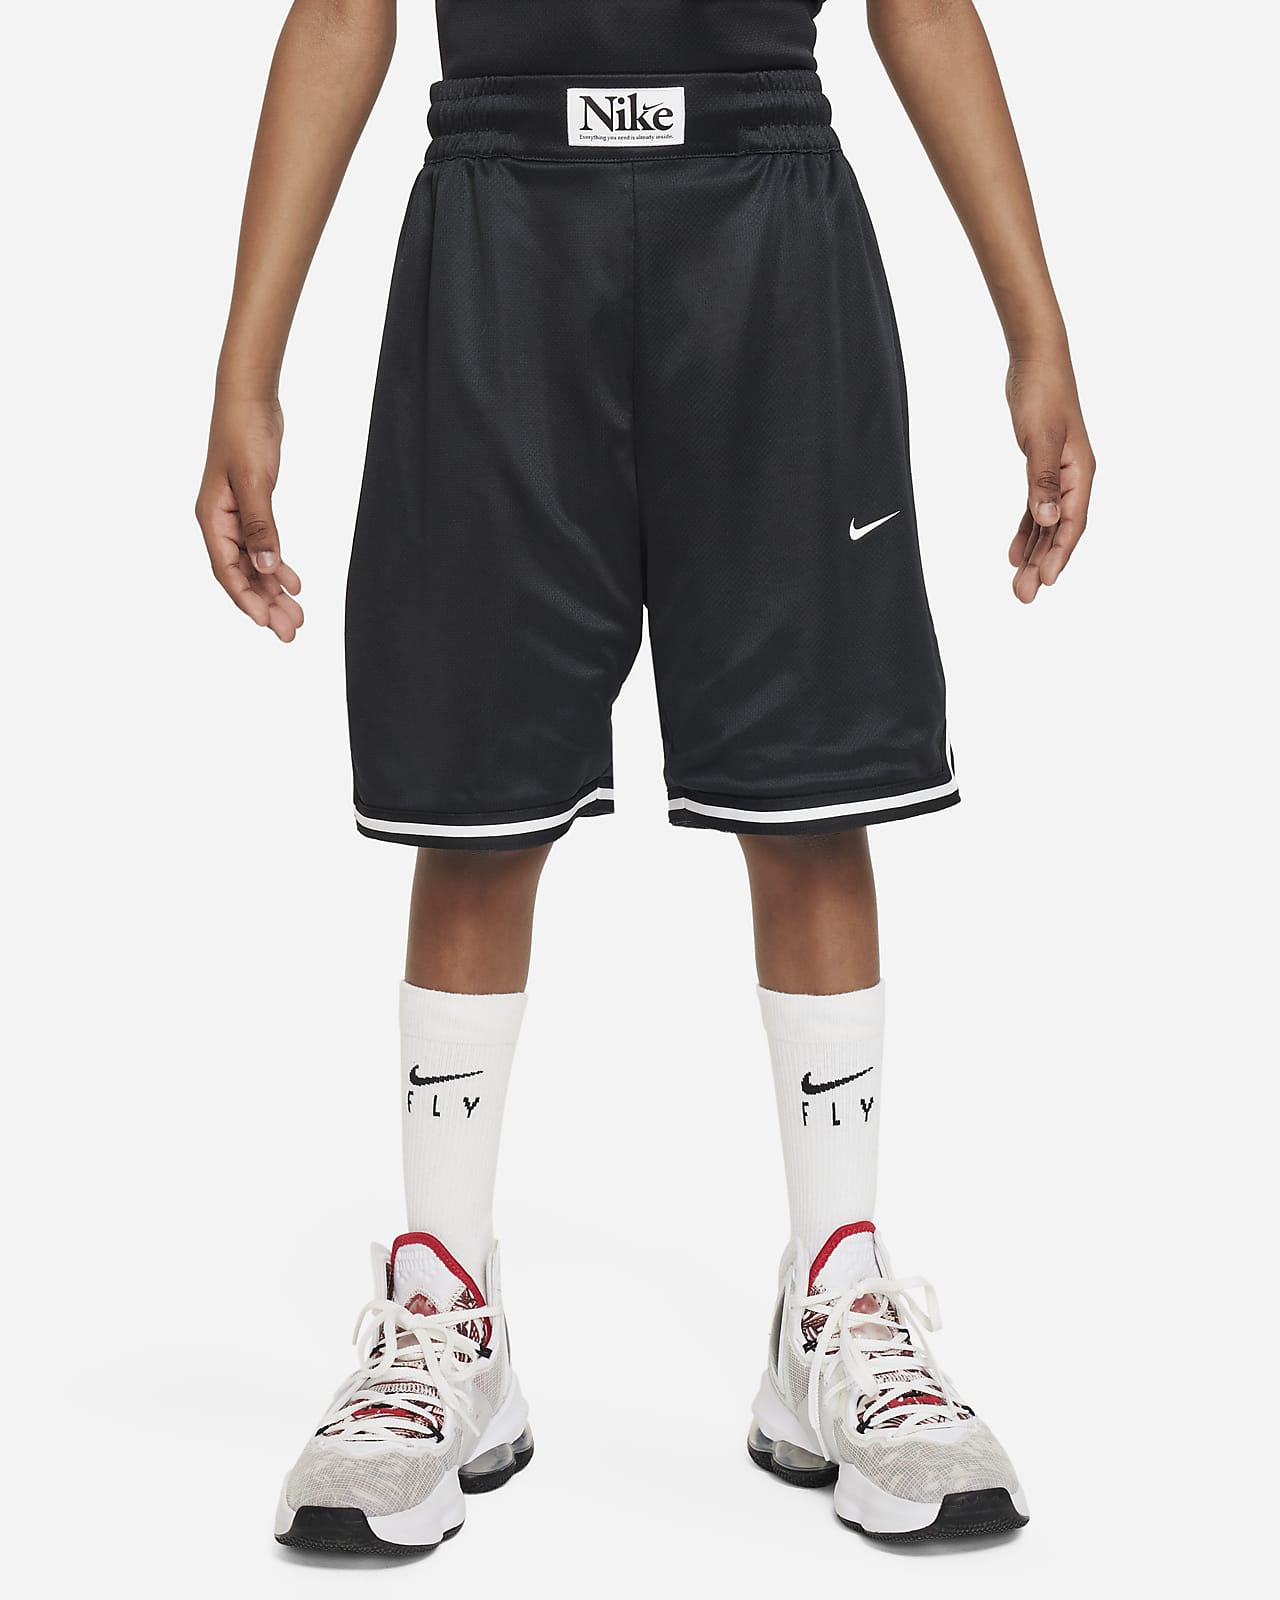 Nike Culture of Basketball DNA Older Kids' Reversible Basketball